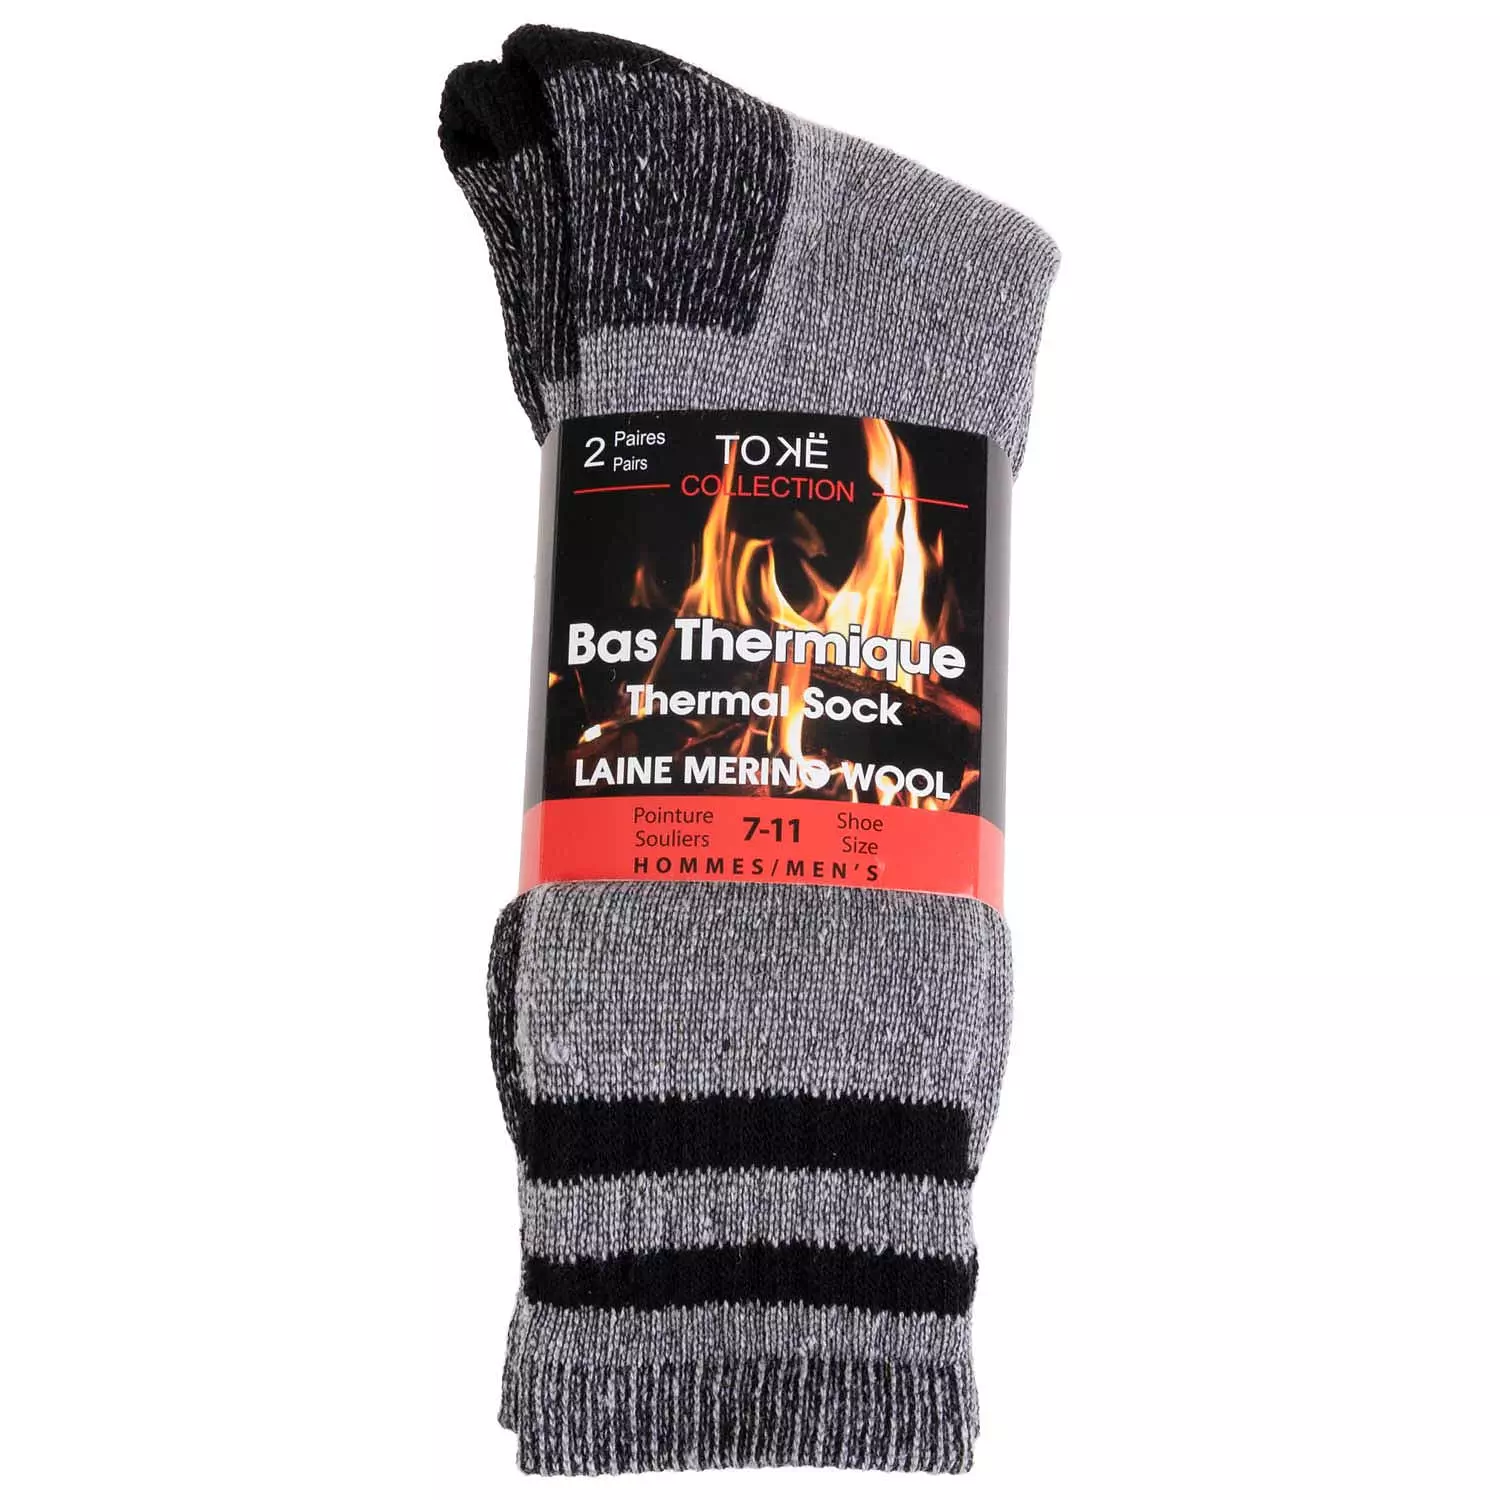 Men's merino wool thermal socks, grey, 2 pairs